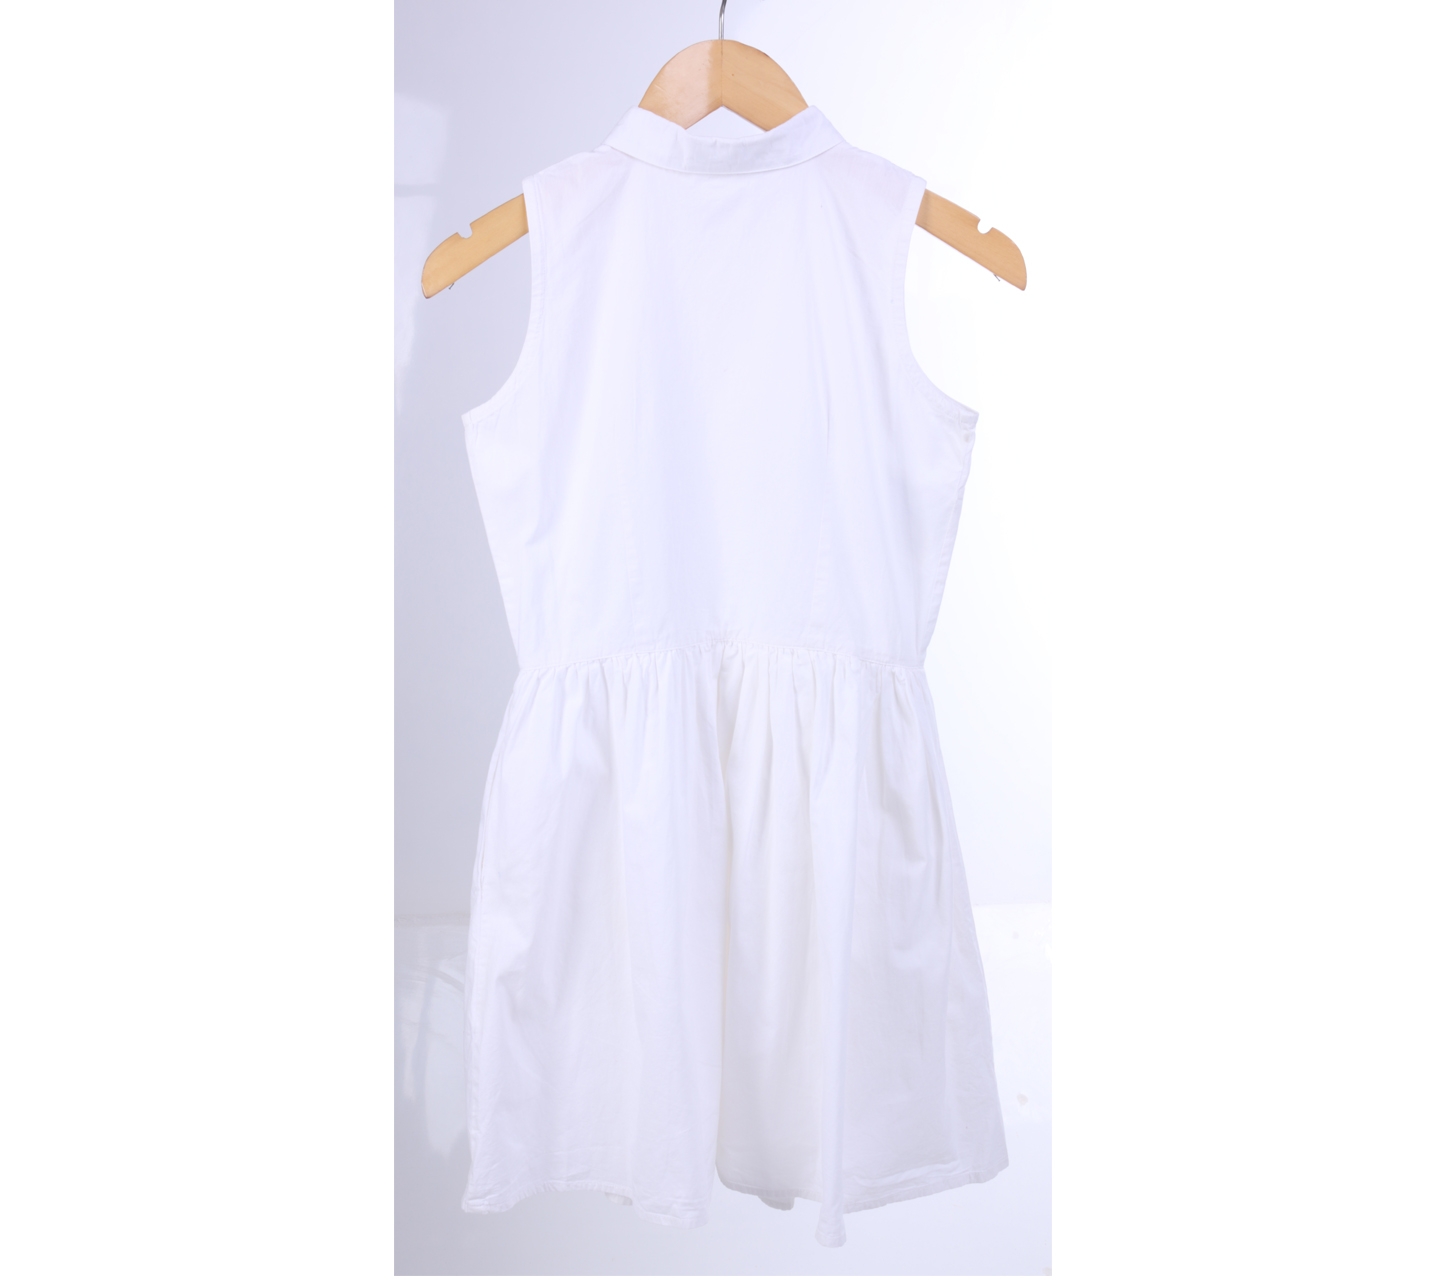 Attic + Willow White Midi Dress